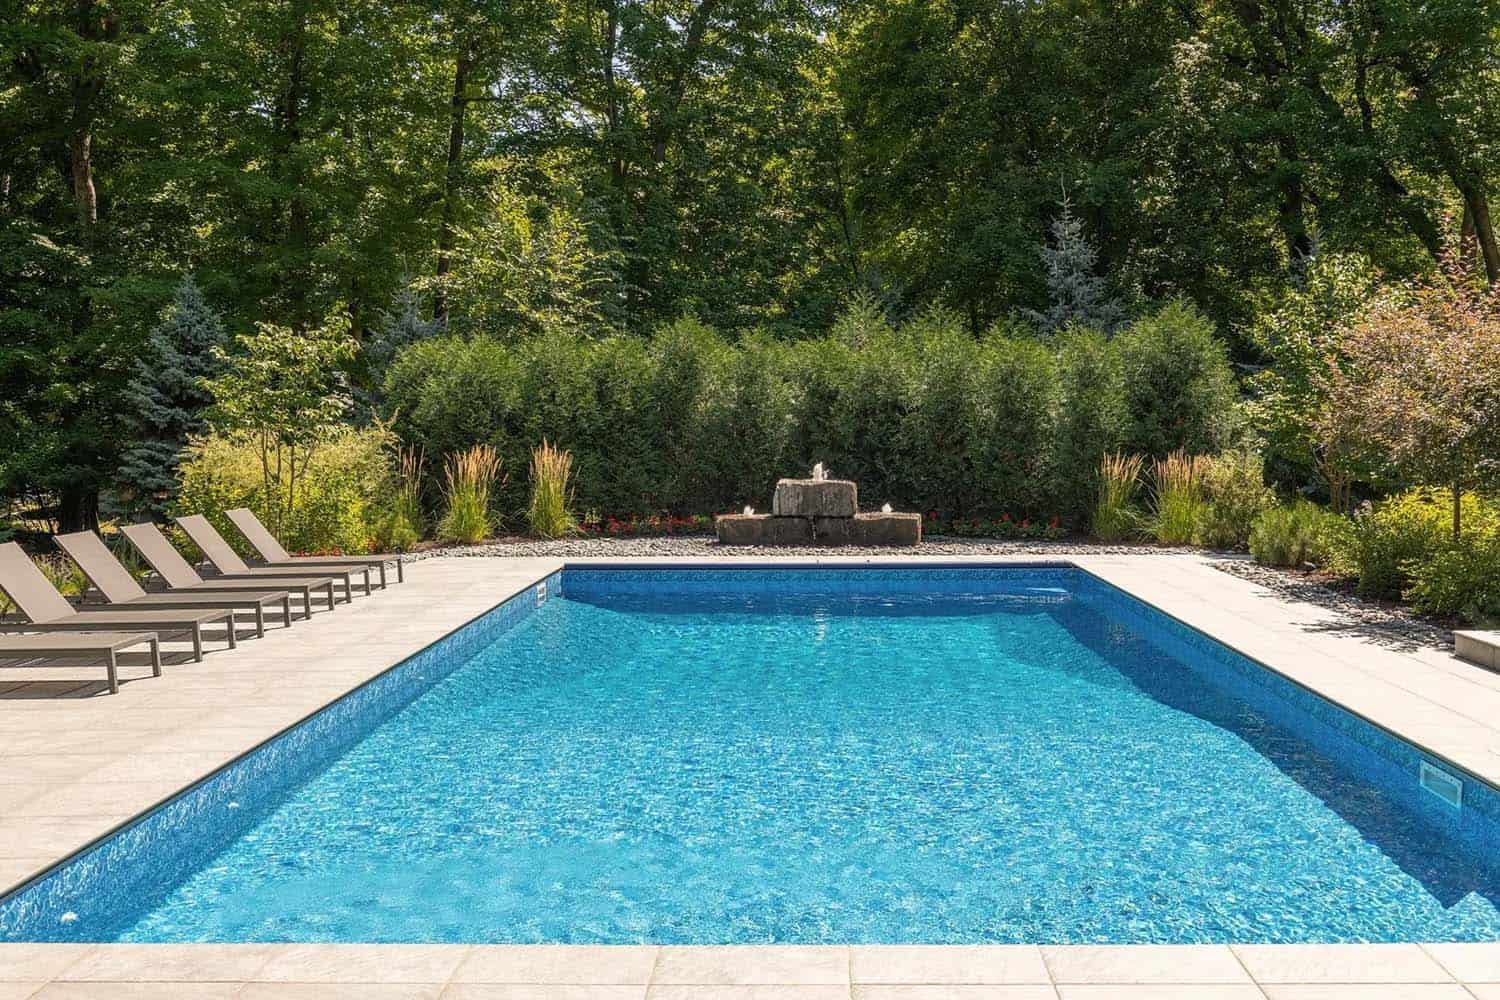 modern lake house backyard with a pool